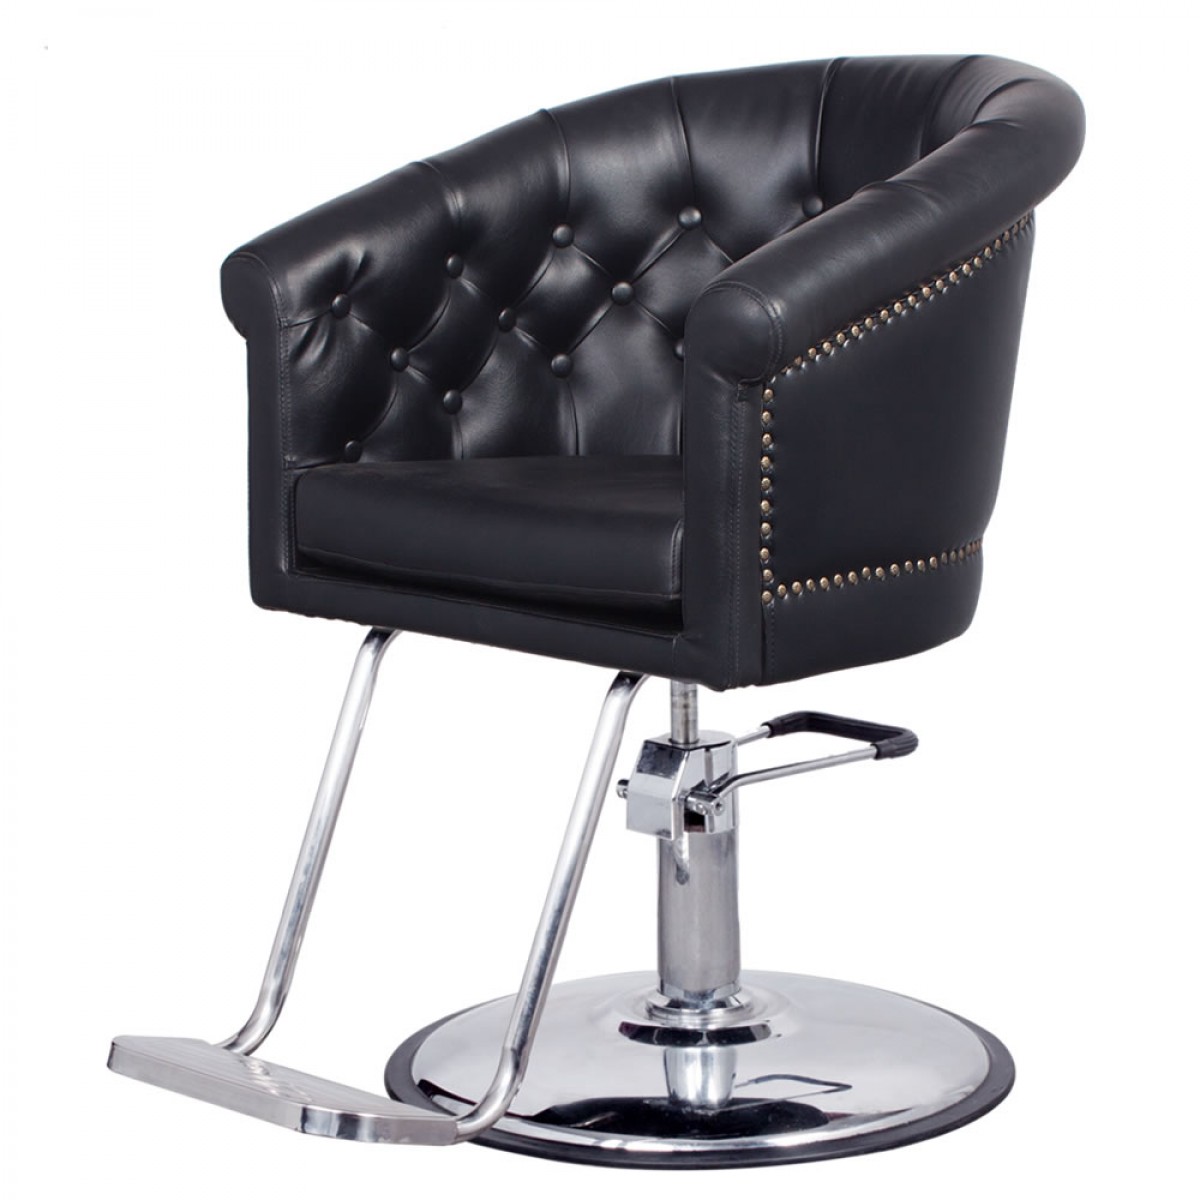 Vernazza Salon Styling Chair Sale